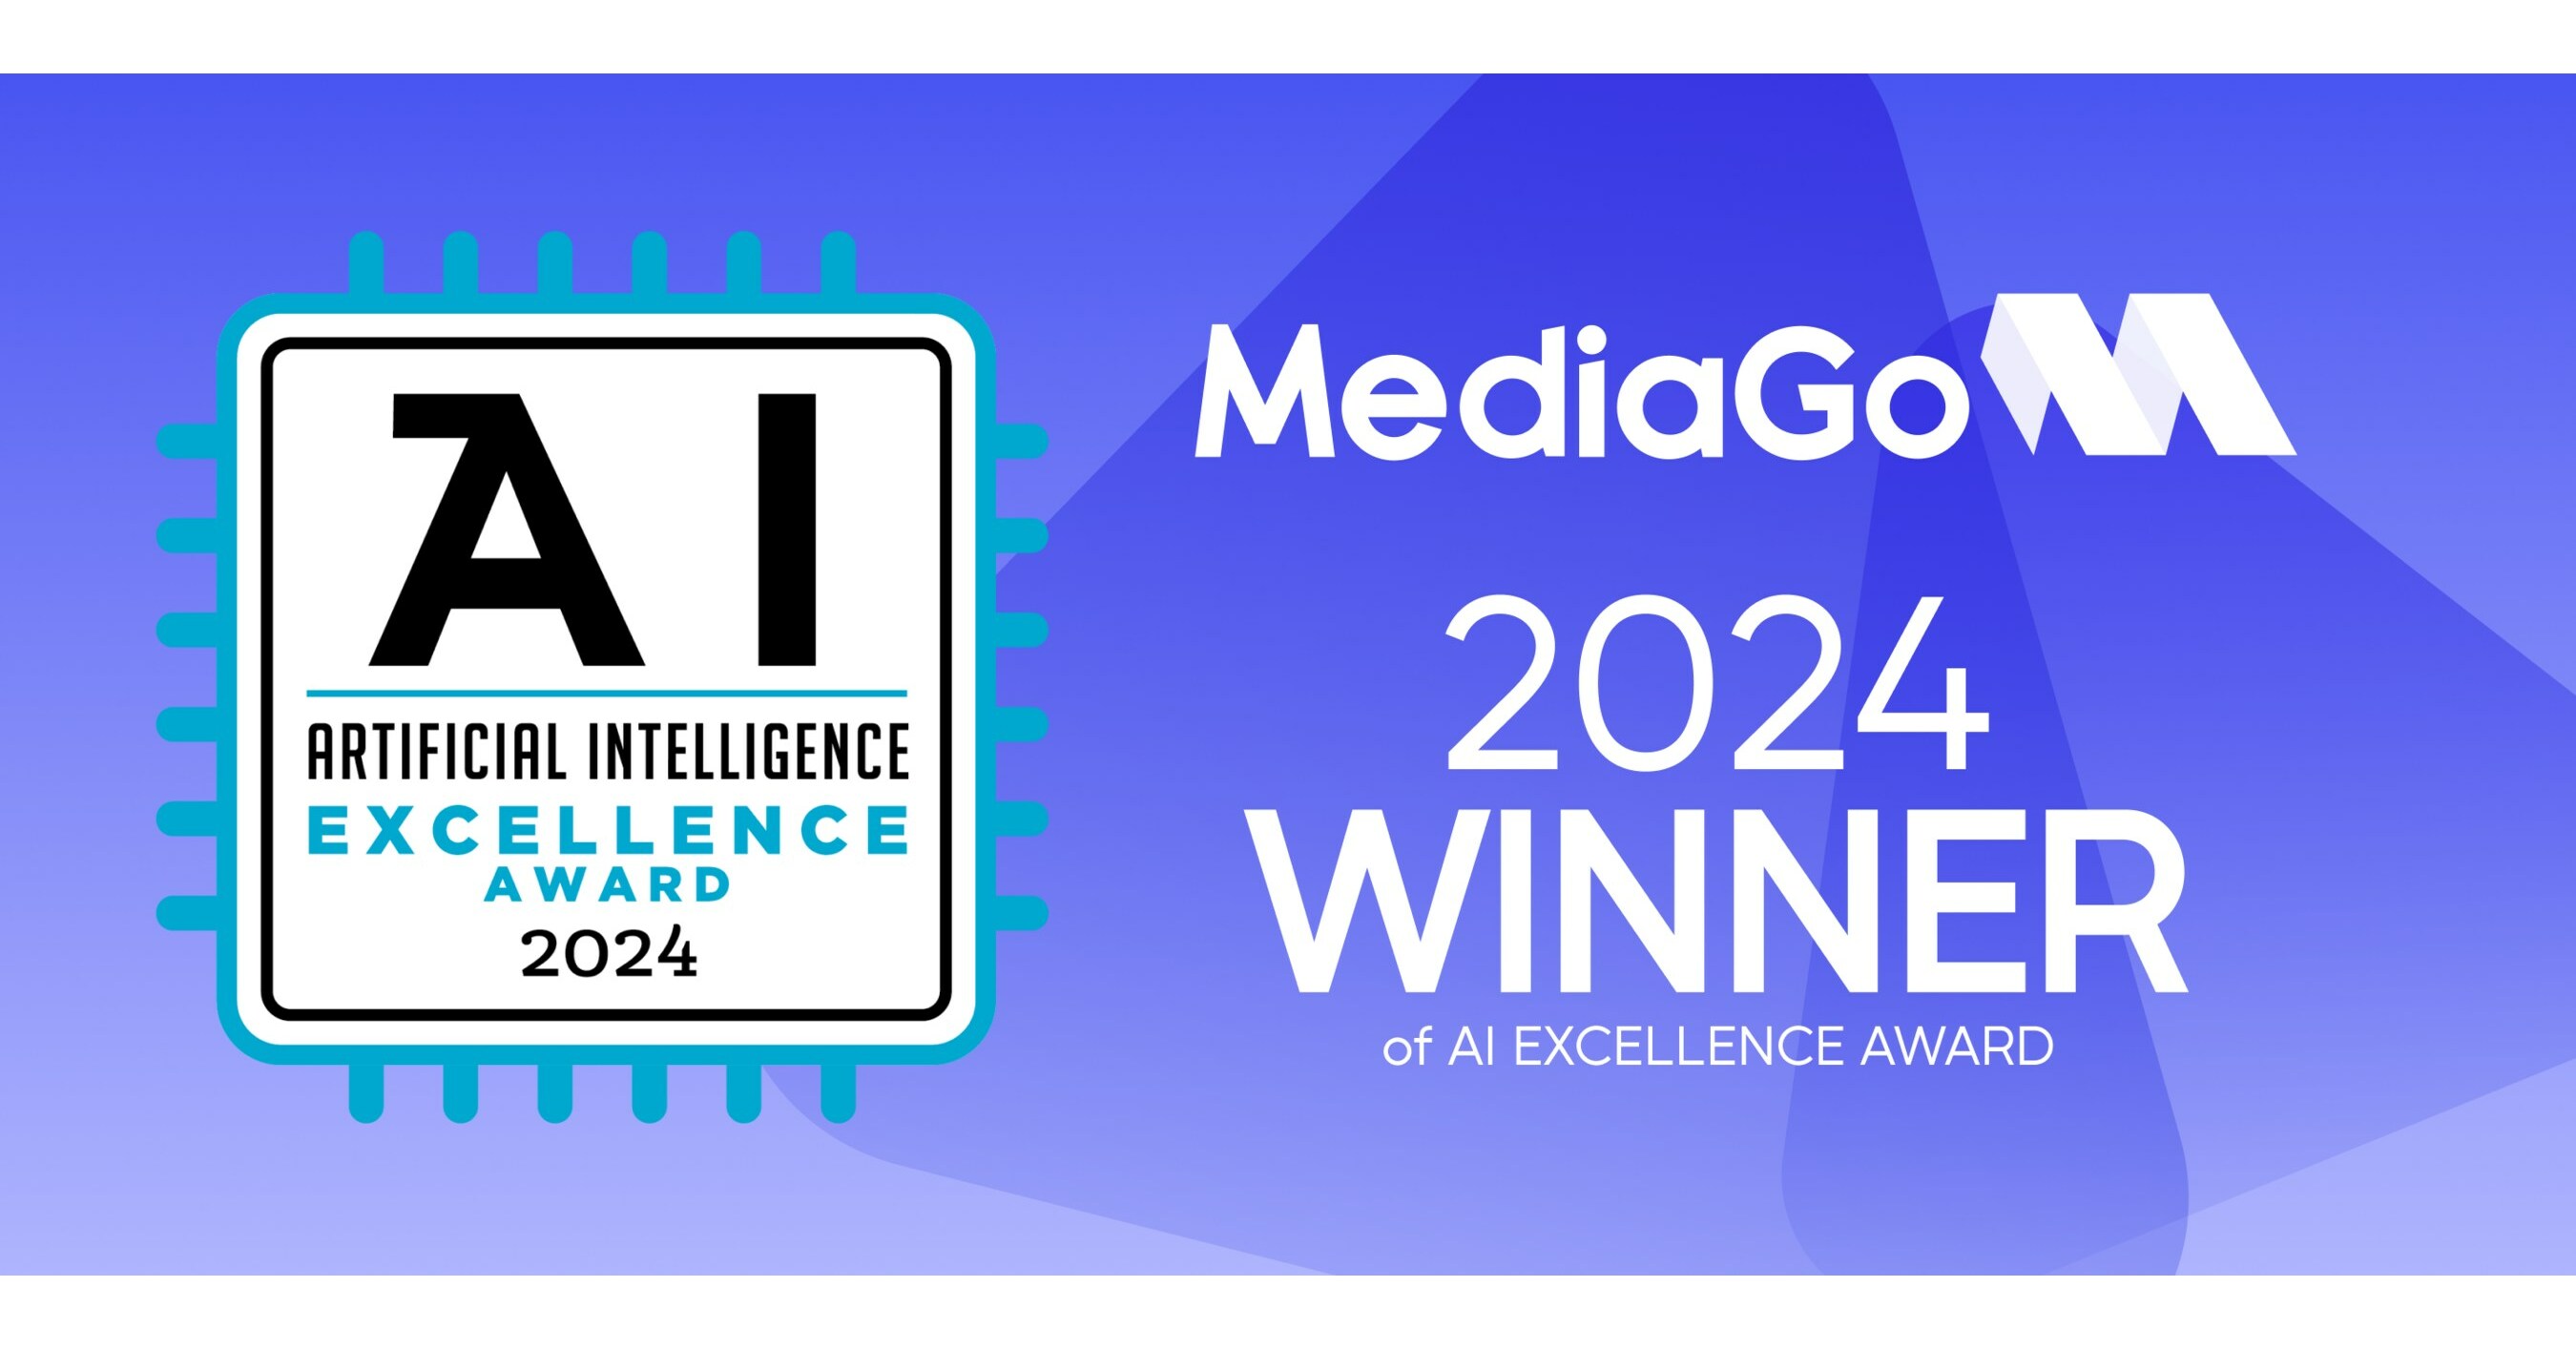 Baidu Worldwide MediaGo Wins 2024 Artificial Intelligence Excellence Award